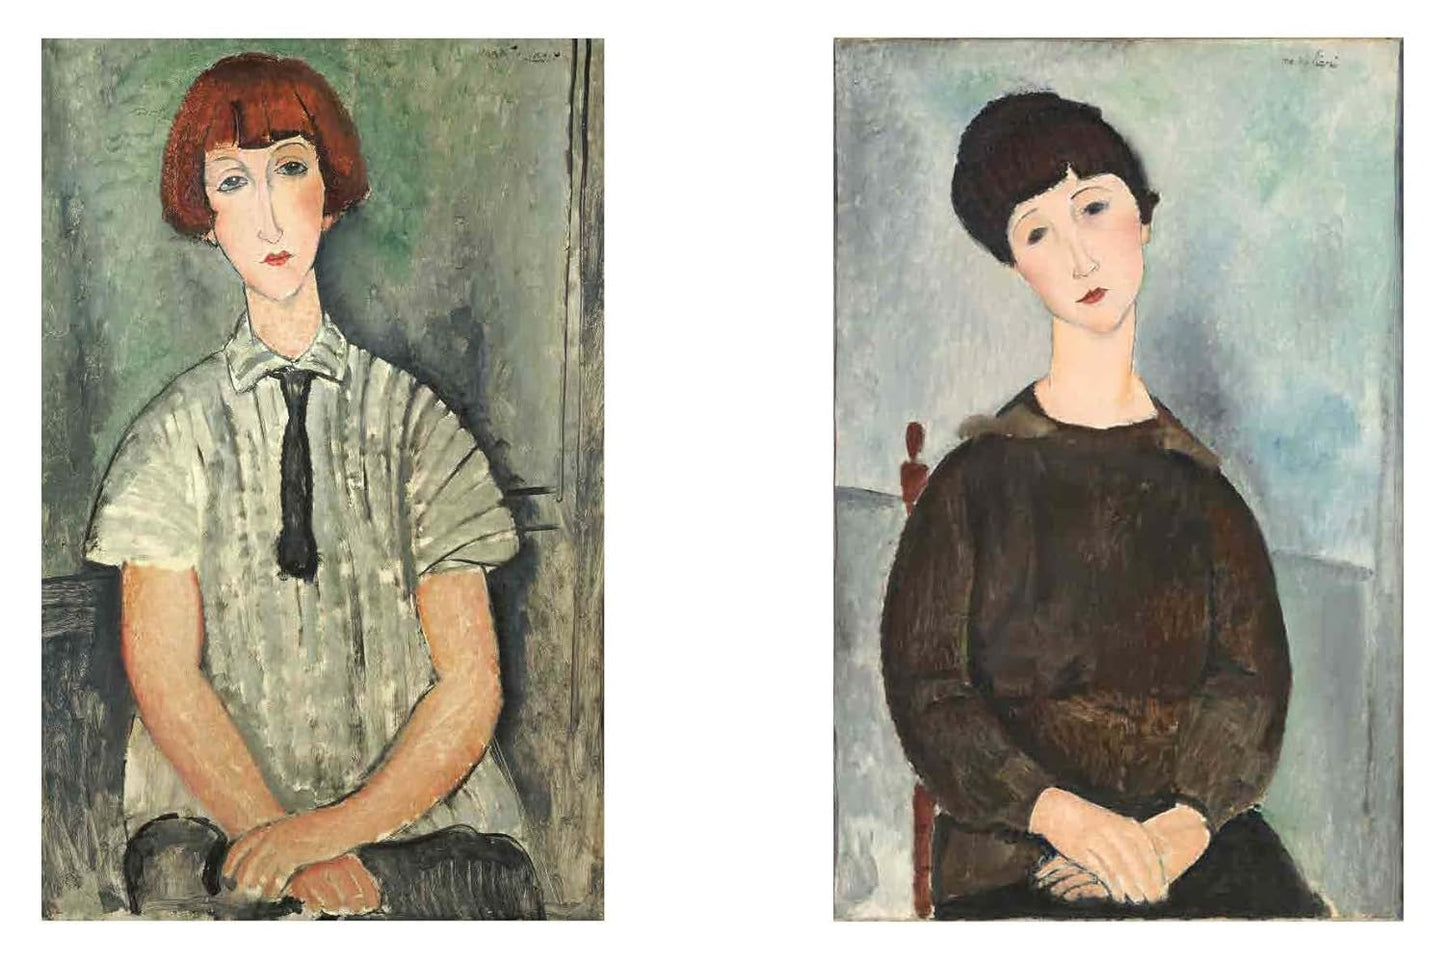 Modigliani Painter Art Dealer